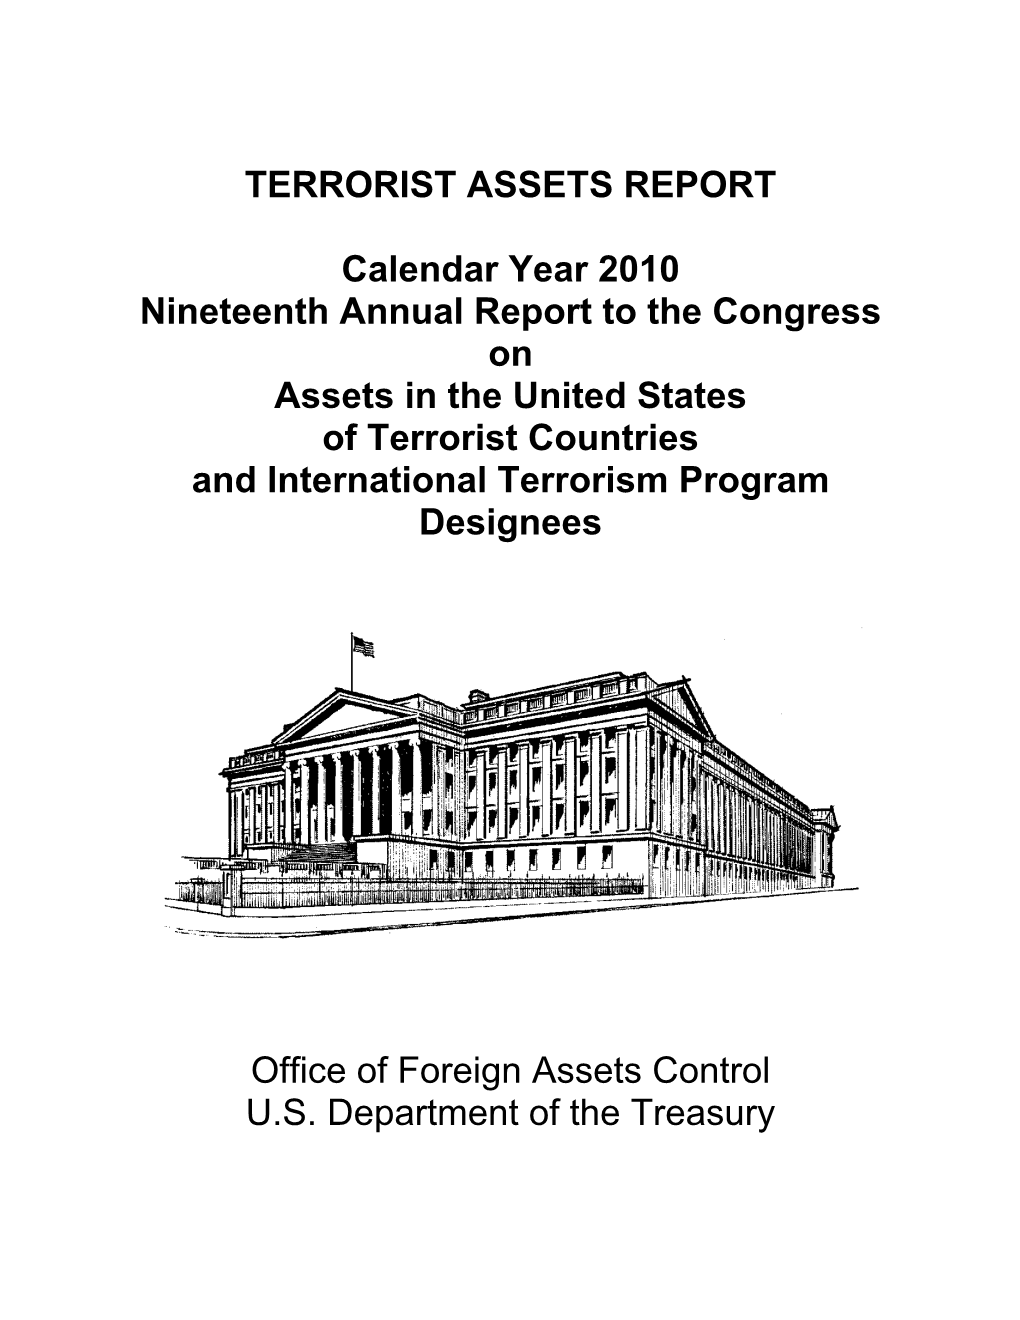 Terrorist Assets Report 2010